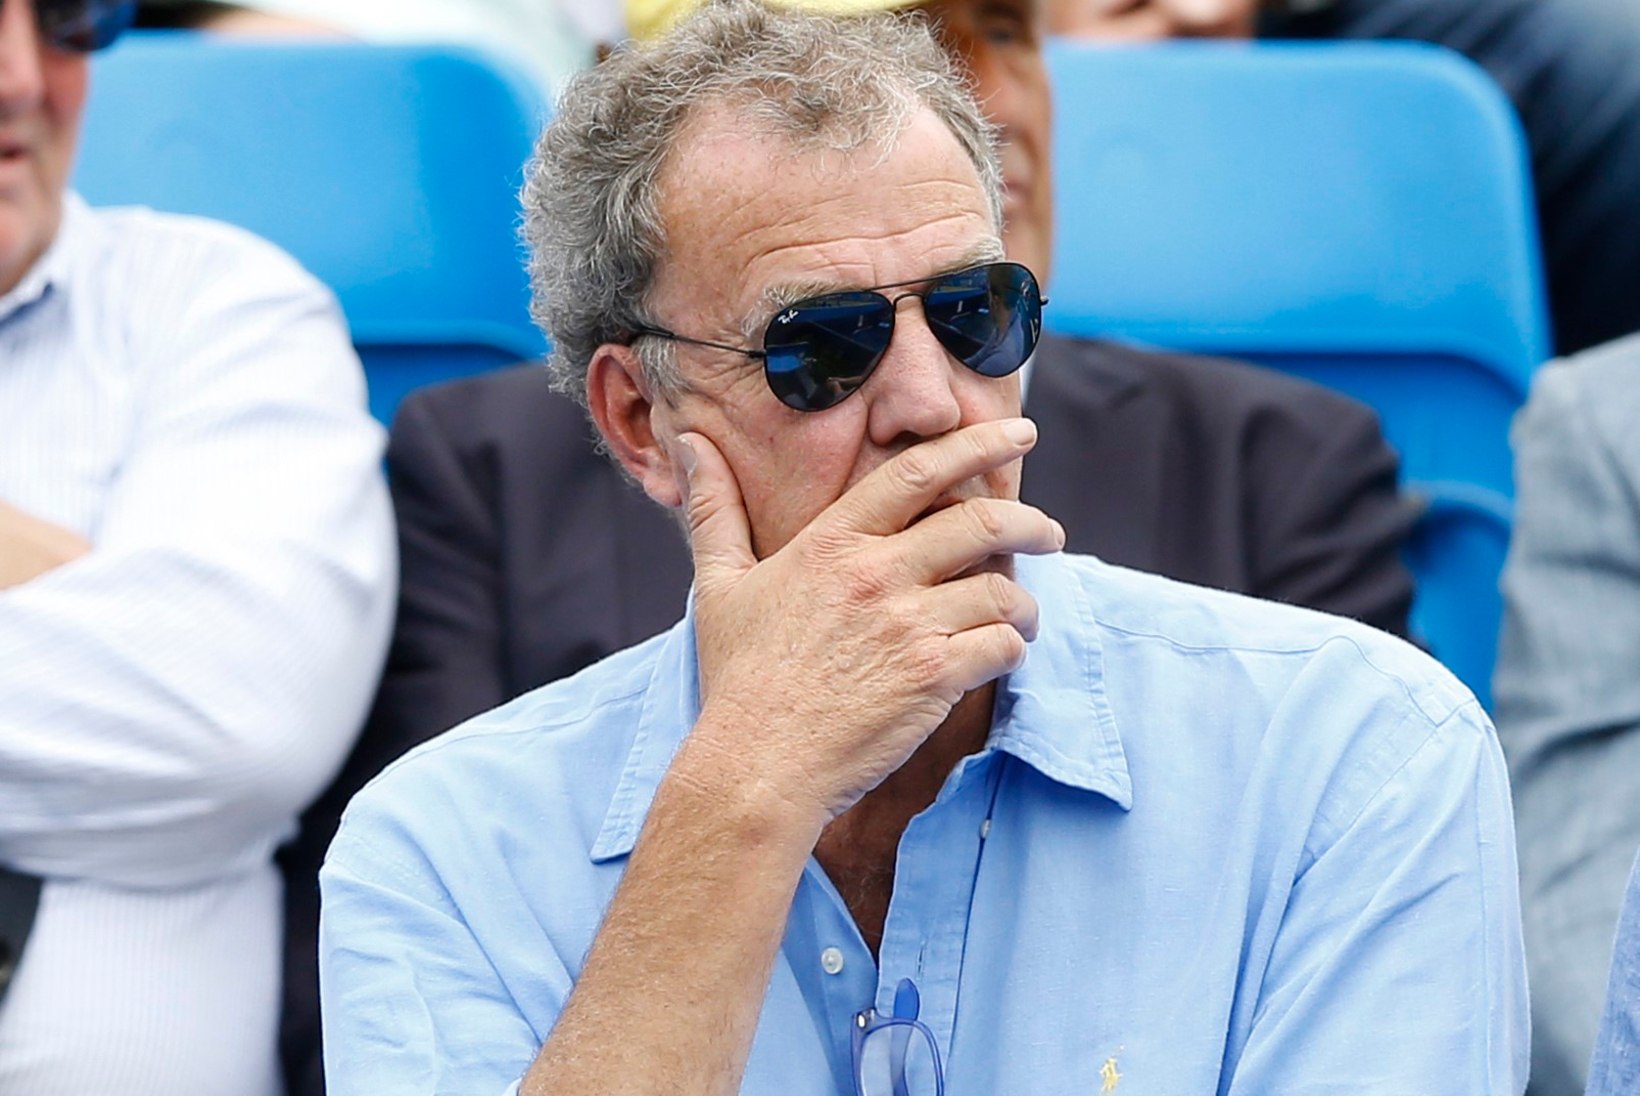 Jeremy Clarkson viidi Mallorcal puhkusel kopsupõletikuga haiglasse 